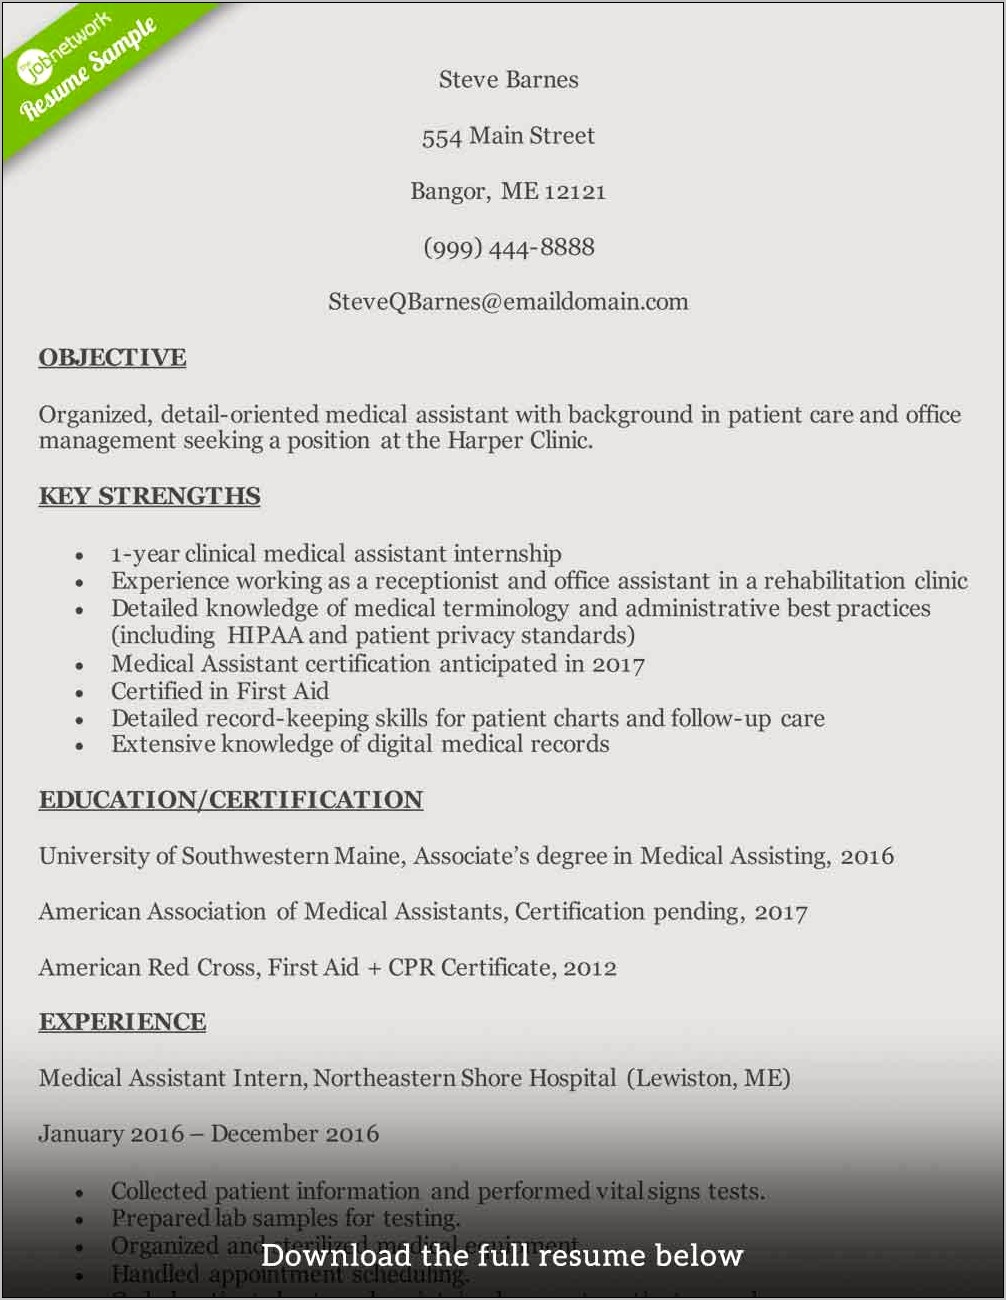 Example Resume For Internship In Medicine